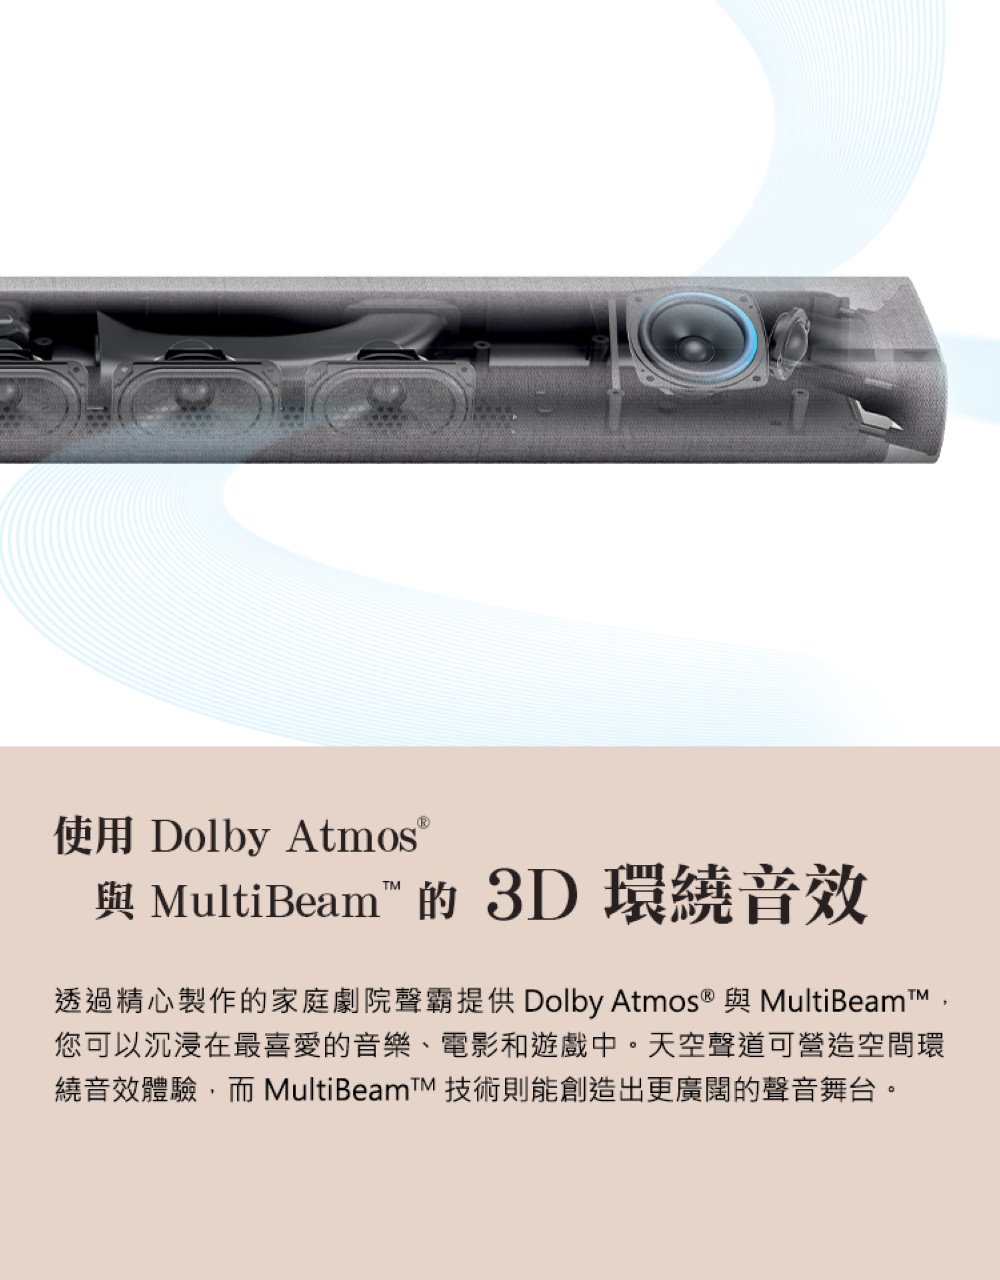 ϥ Dolby Atmos P MultiBeam 3D¶ zL߻s@ax@|nQ Dolby Atmos  P MultiBeam ziHIb̳߷R֡BqvMCCѪnDiyŶ ¶,MultiBeamTM ޳NhгyXs諸nRxC 